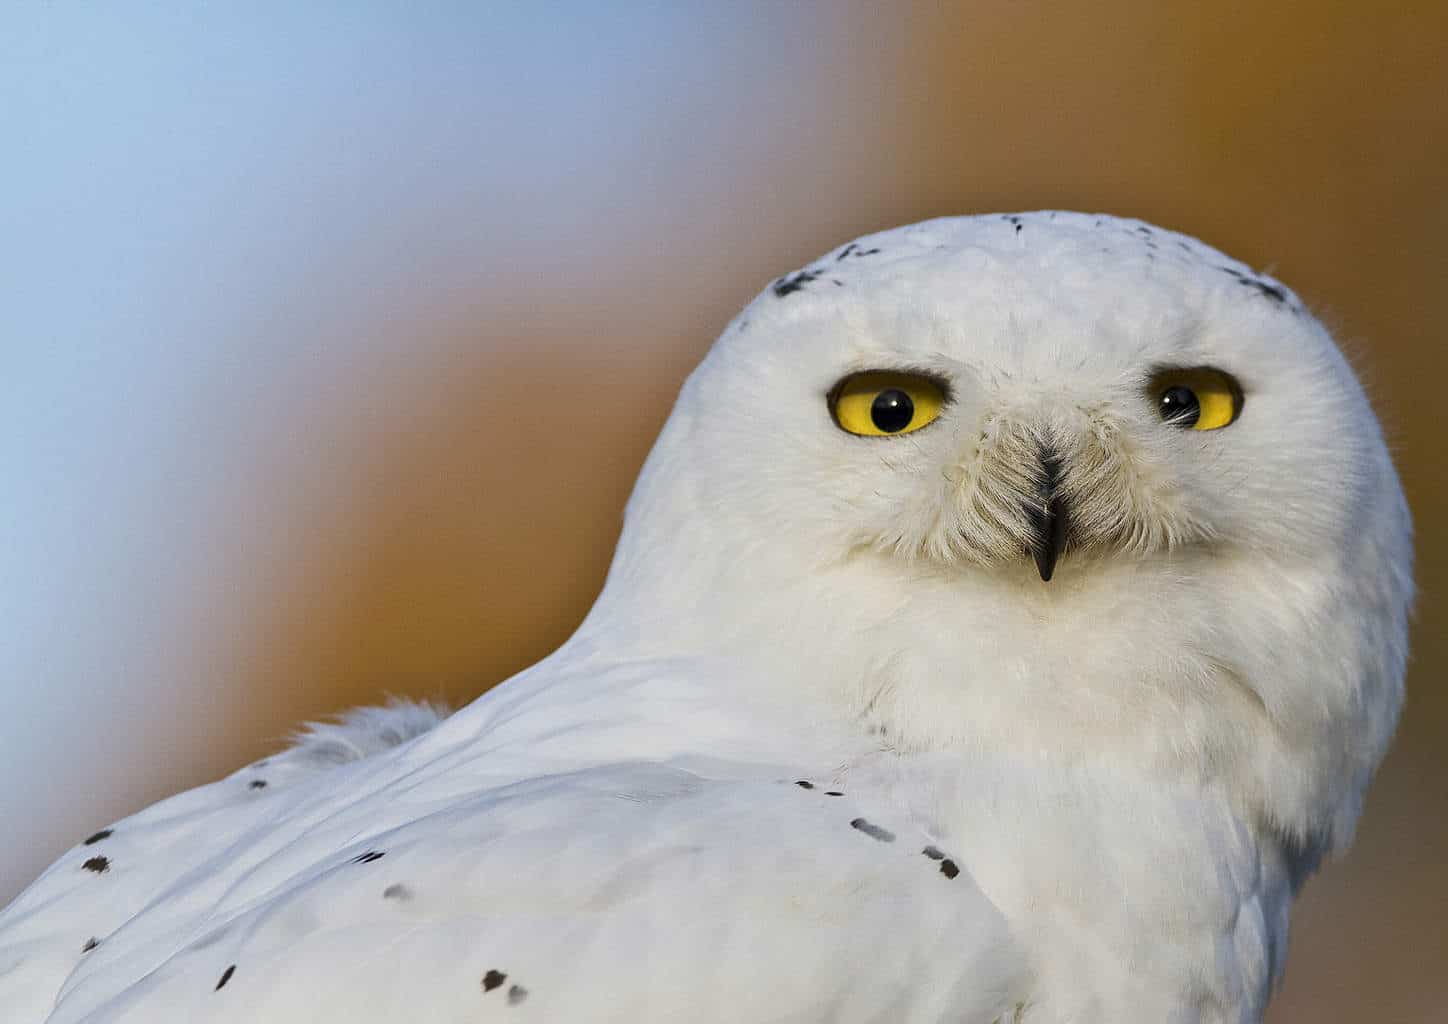 Stock Image of a Snowy Owl Closeup - National Centre for Birds of Prey